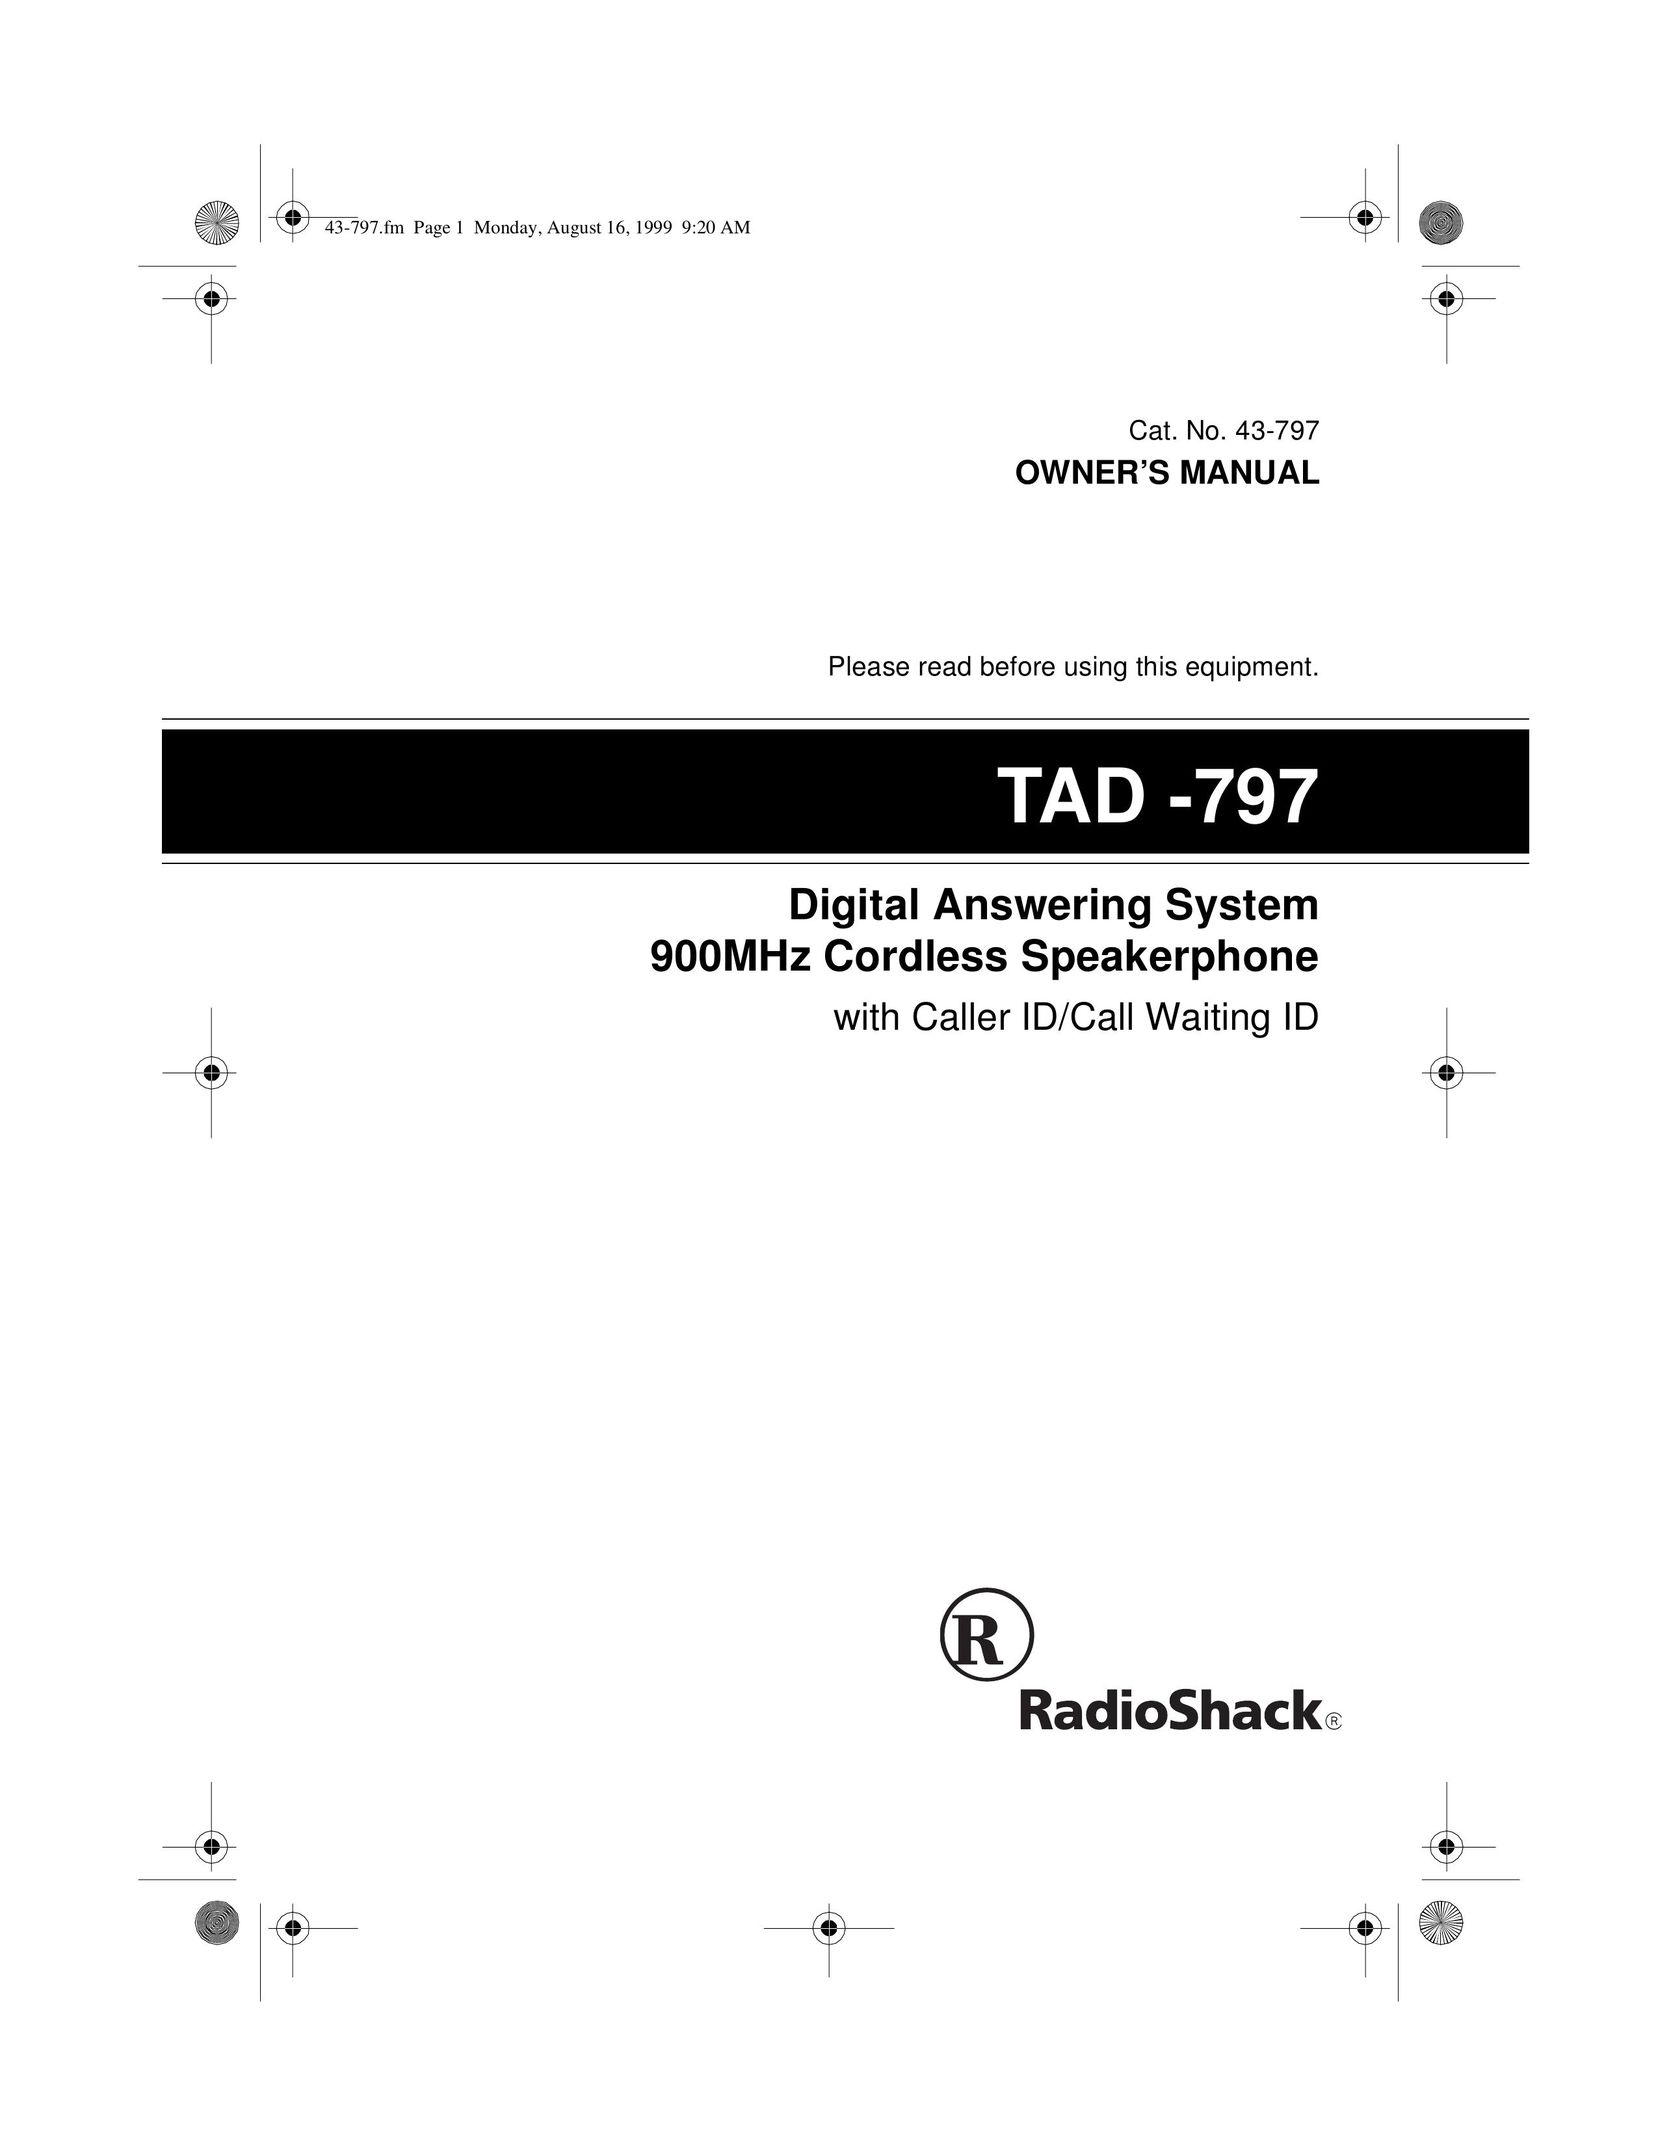 Radio Shack TAD-797 Conference Phone User Manual